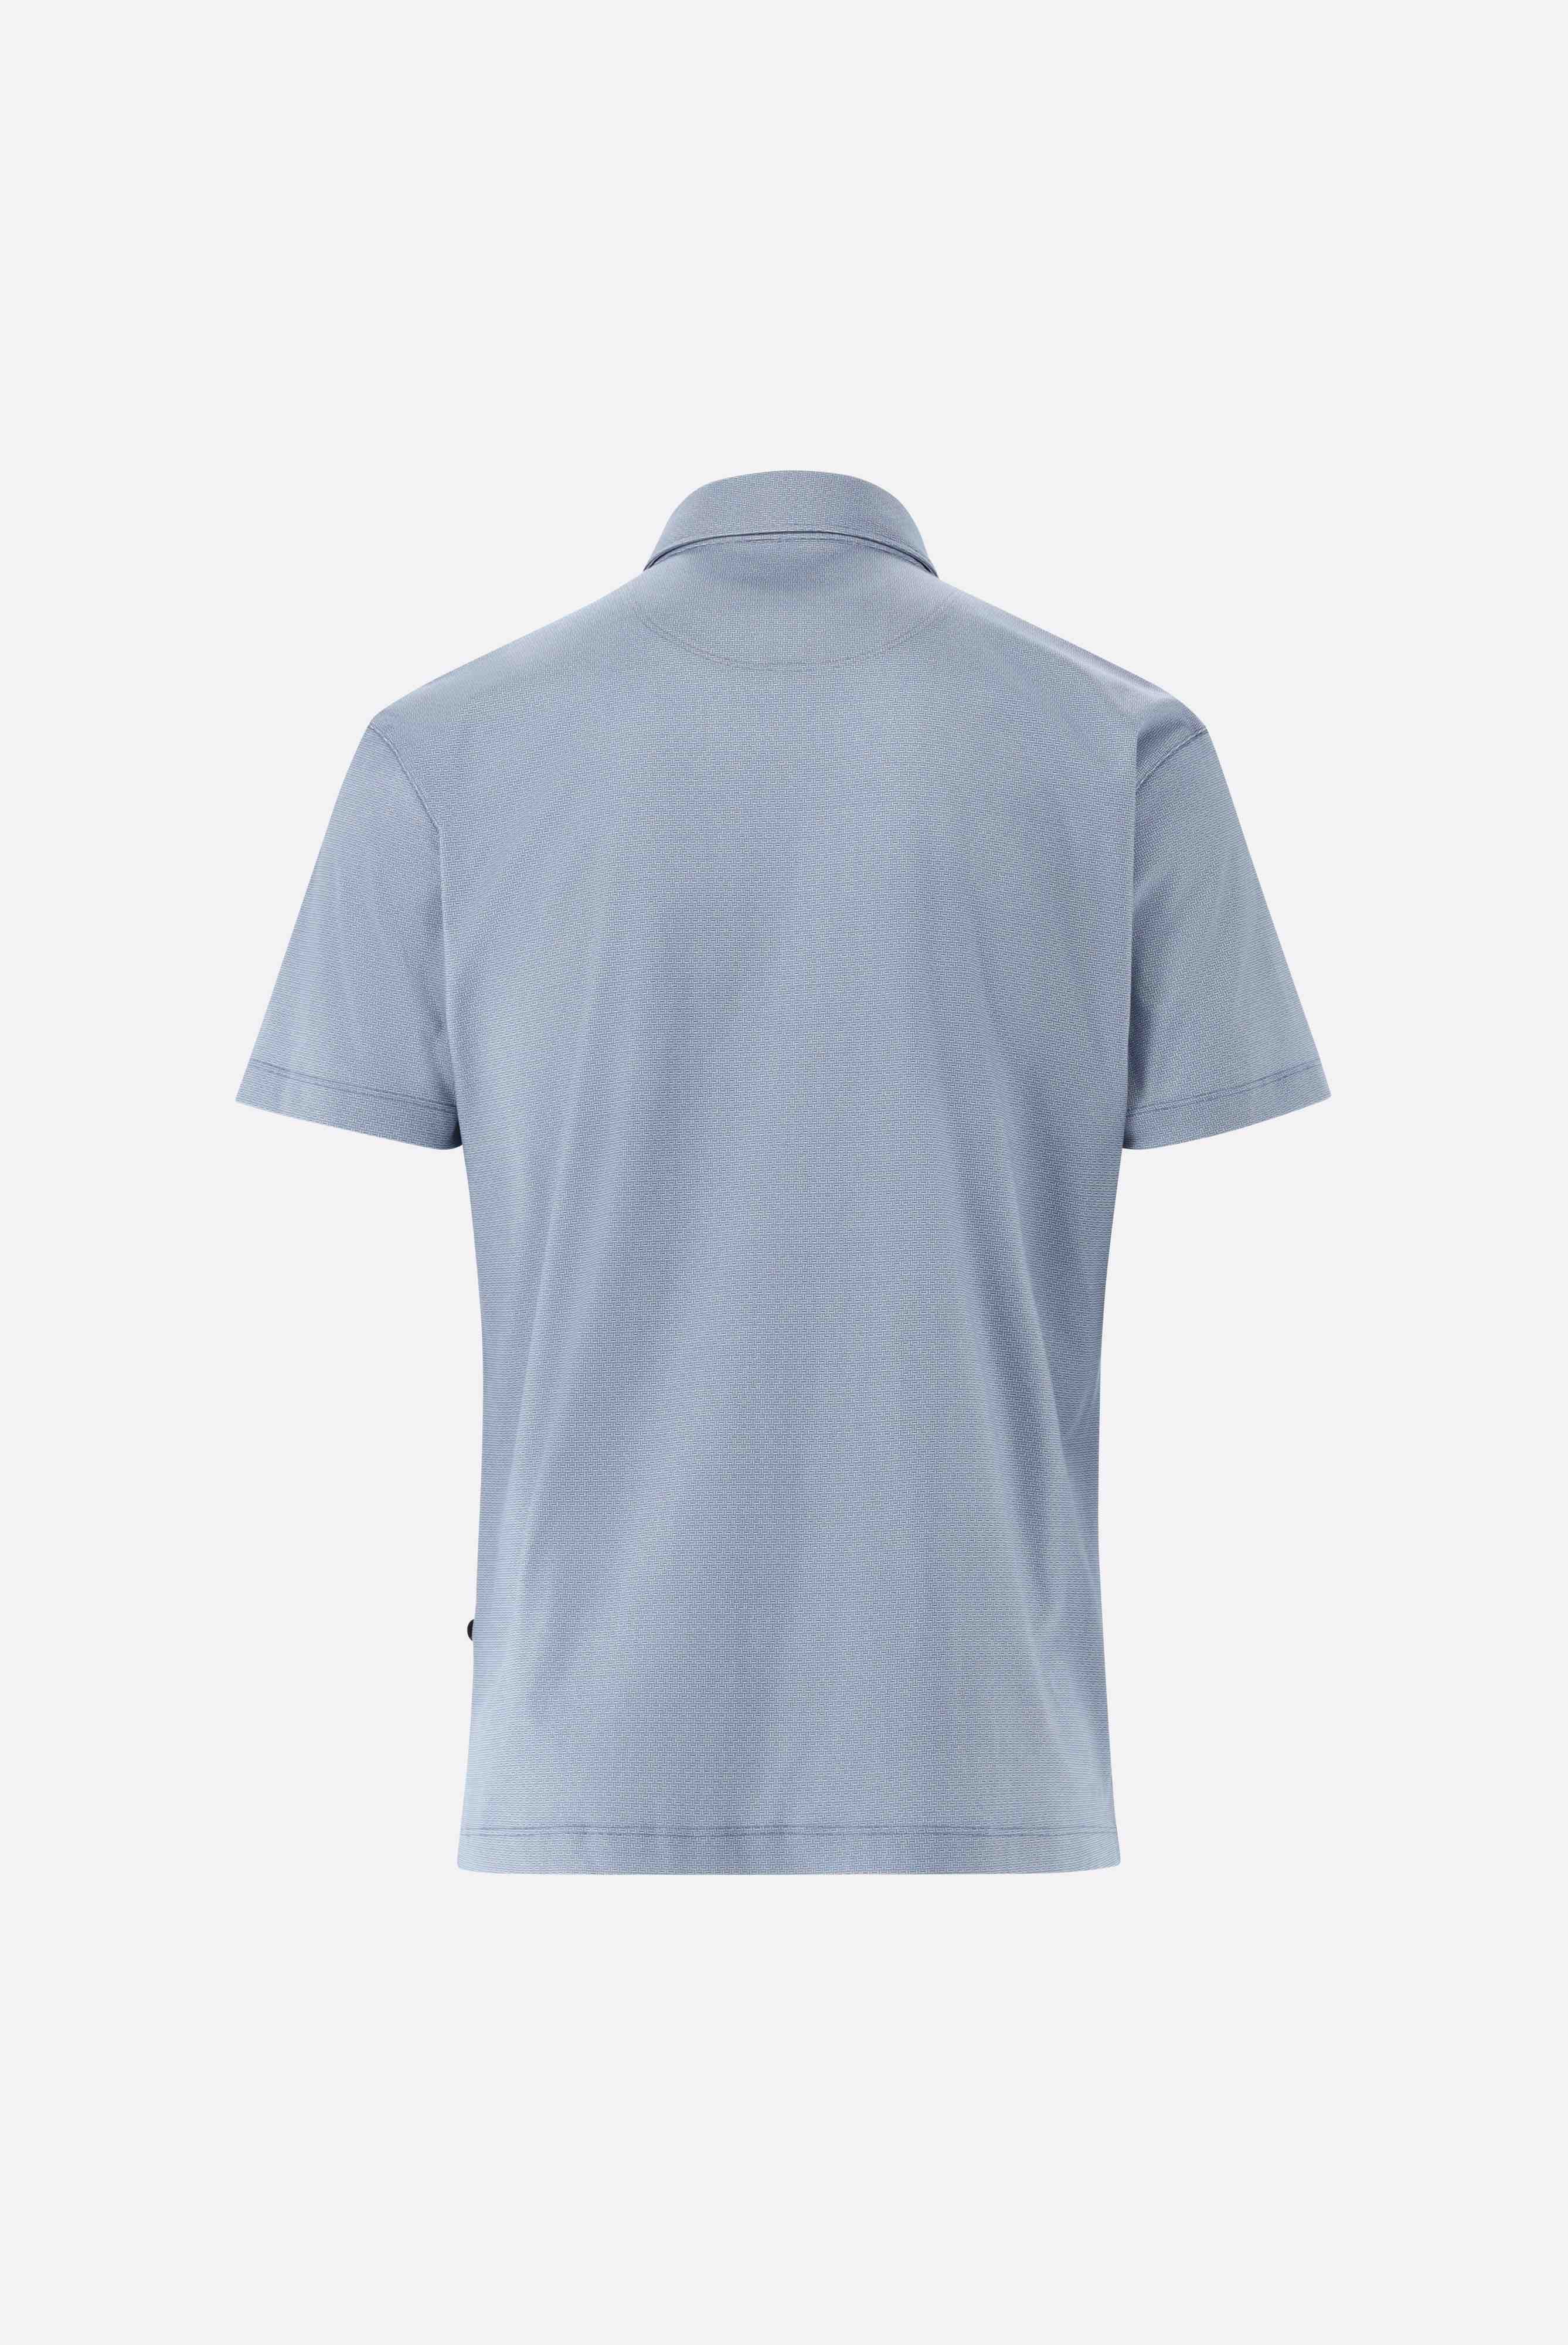 Poloshirts+Jersey Polo Shirt with Micro Print made of Swiss Cotton+20.1720.UC.187754.740.S